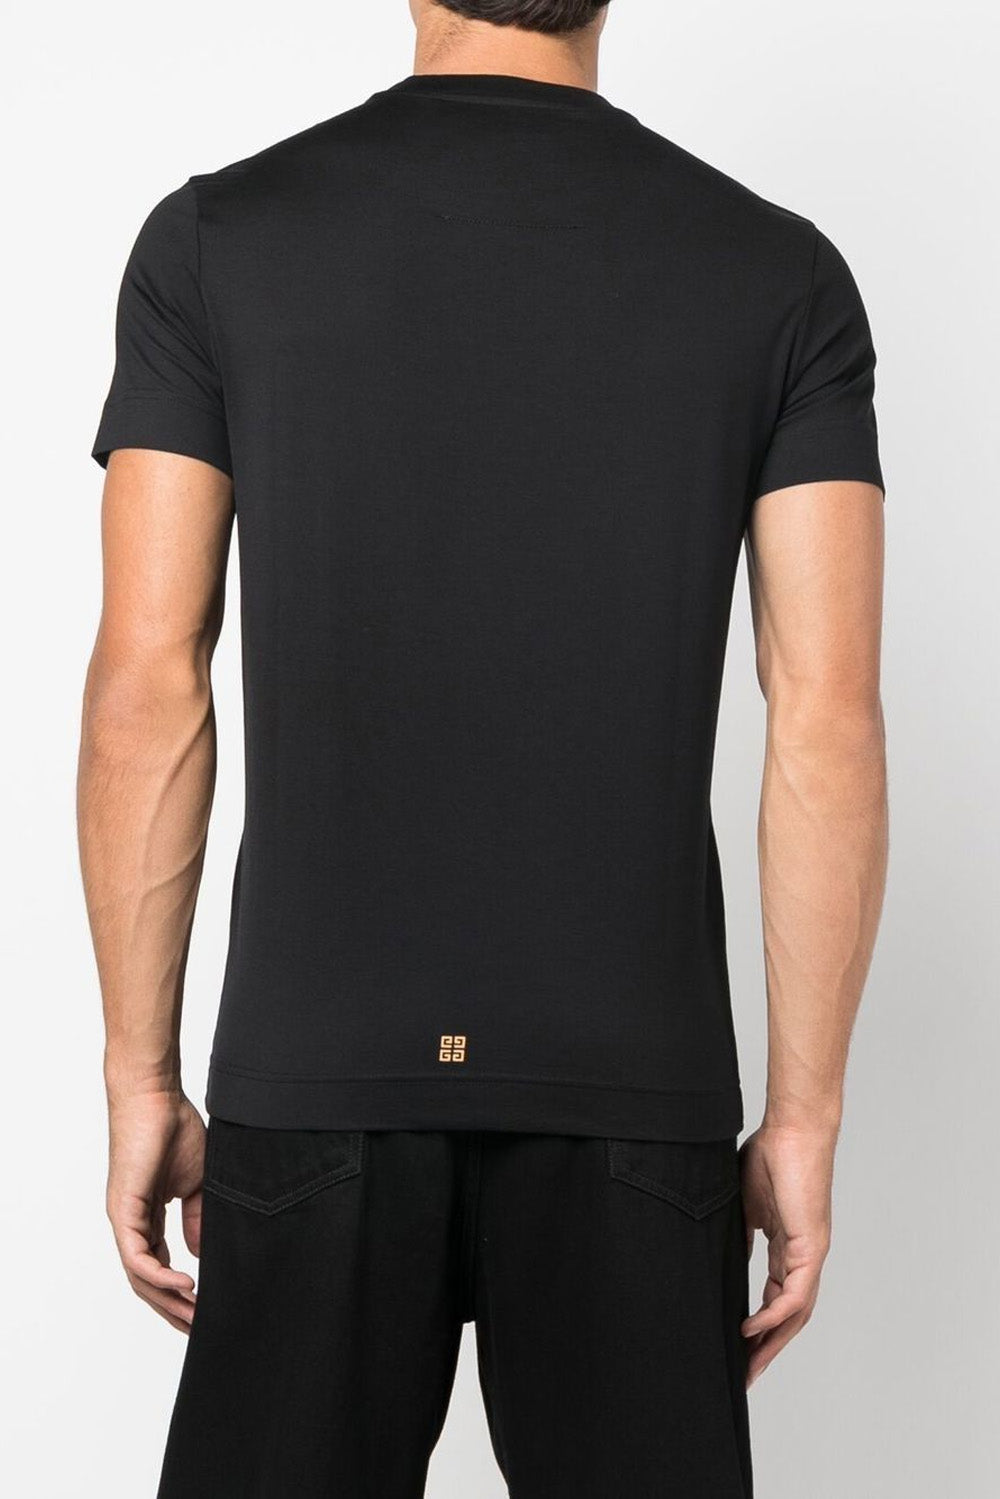 Givenchy star-print logo T-shirt